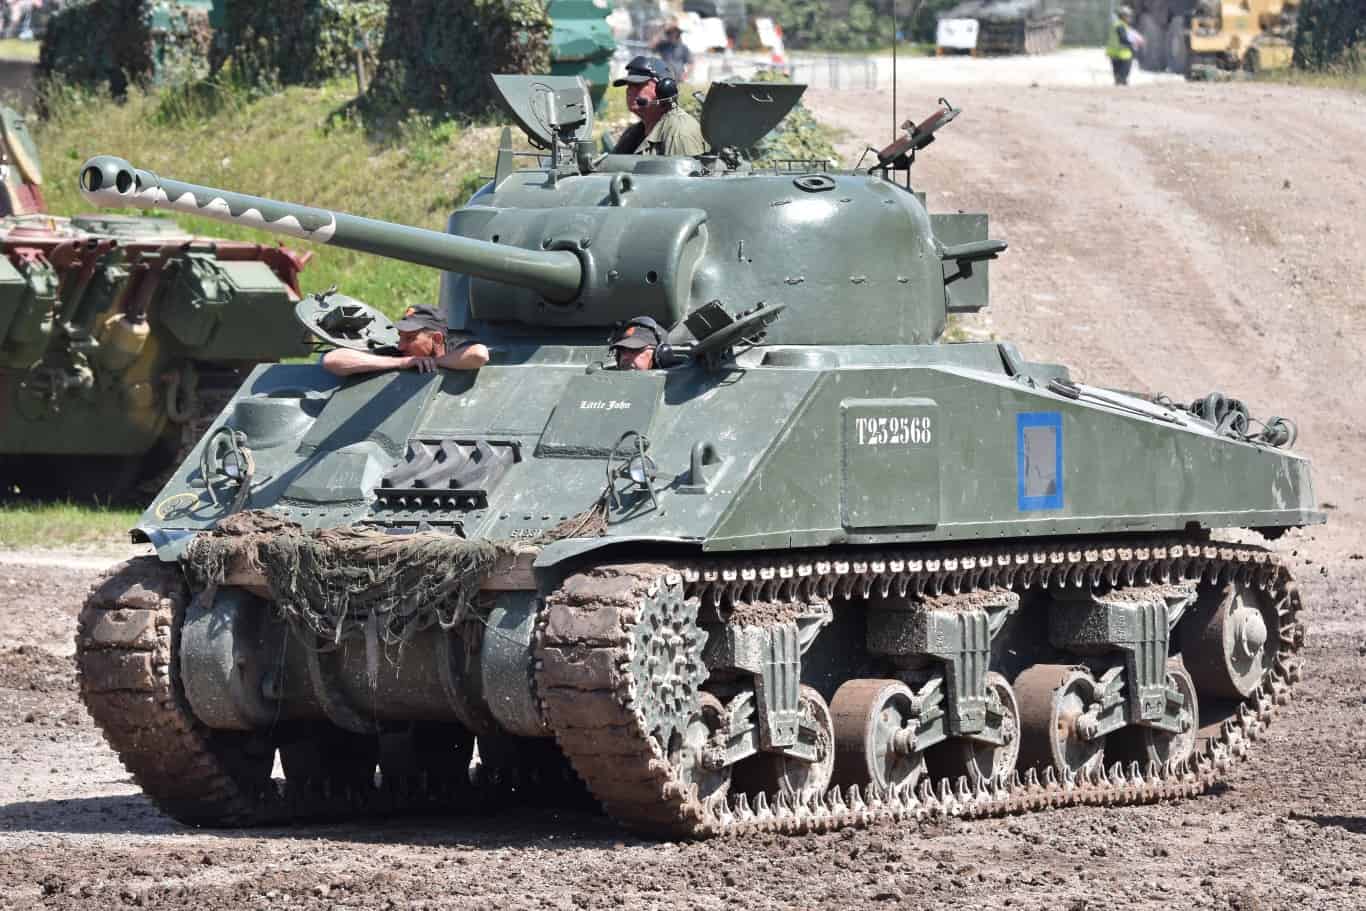 Sherman+Firefly+Medium+Tank+M4A4 | Sherman Firefly Vc Ã¢ÂÂT232568Ã¢ÂÂ Ã¢ÂÂLittle JohnÃ¢ÂÂ